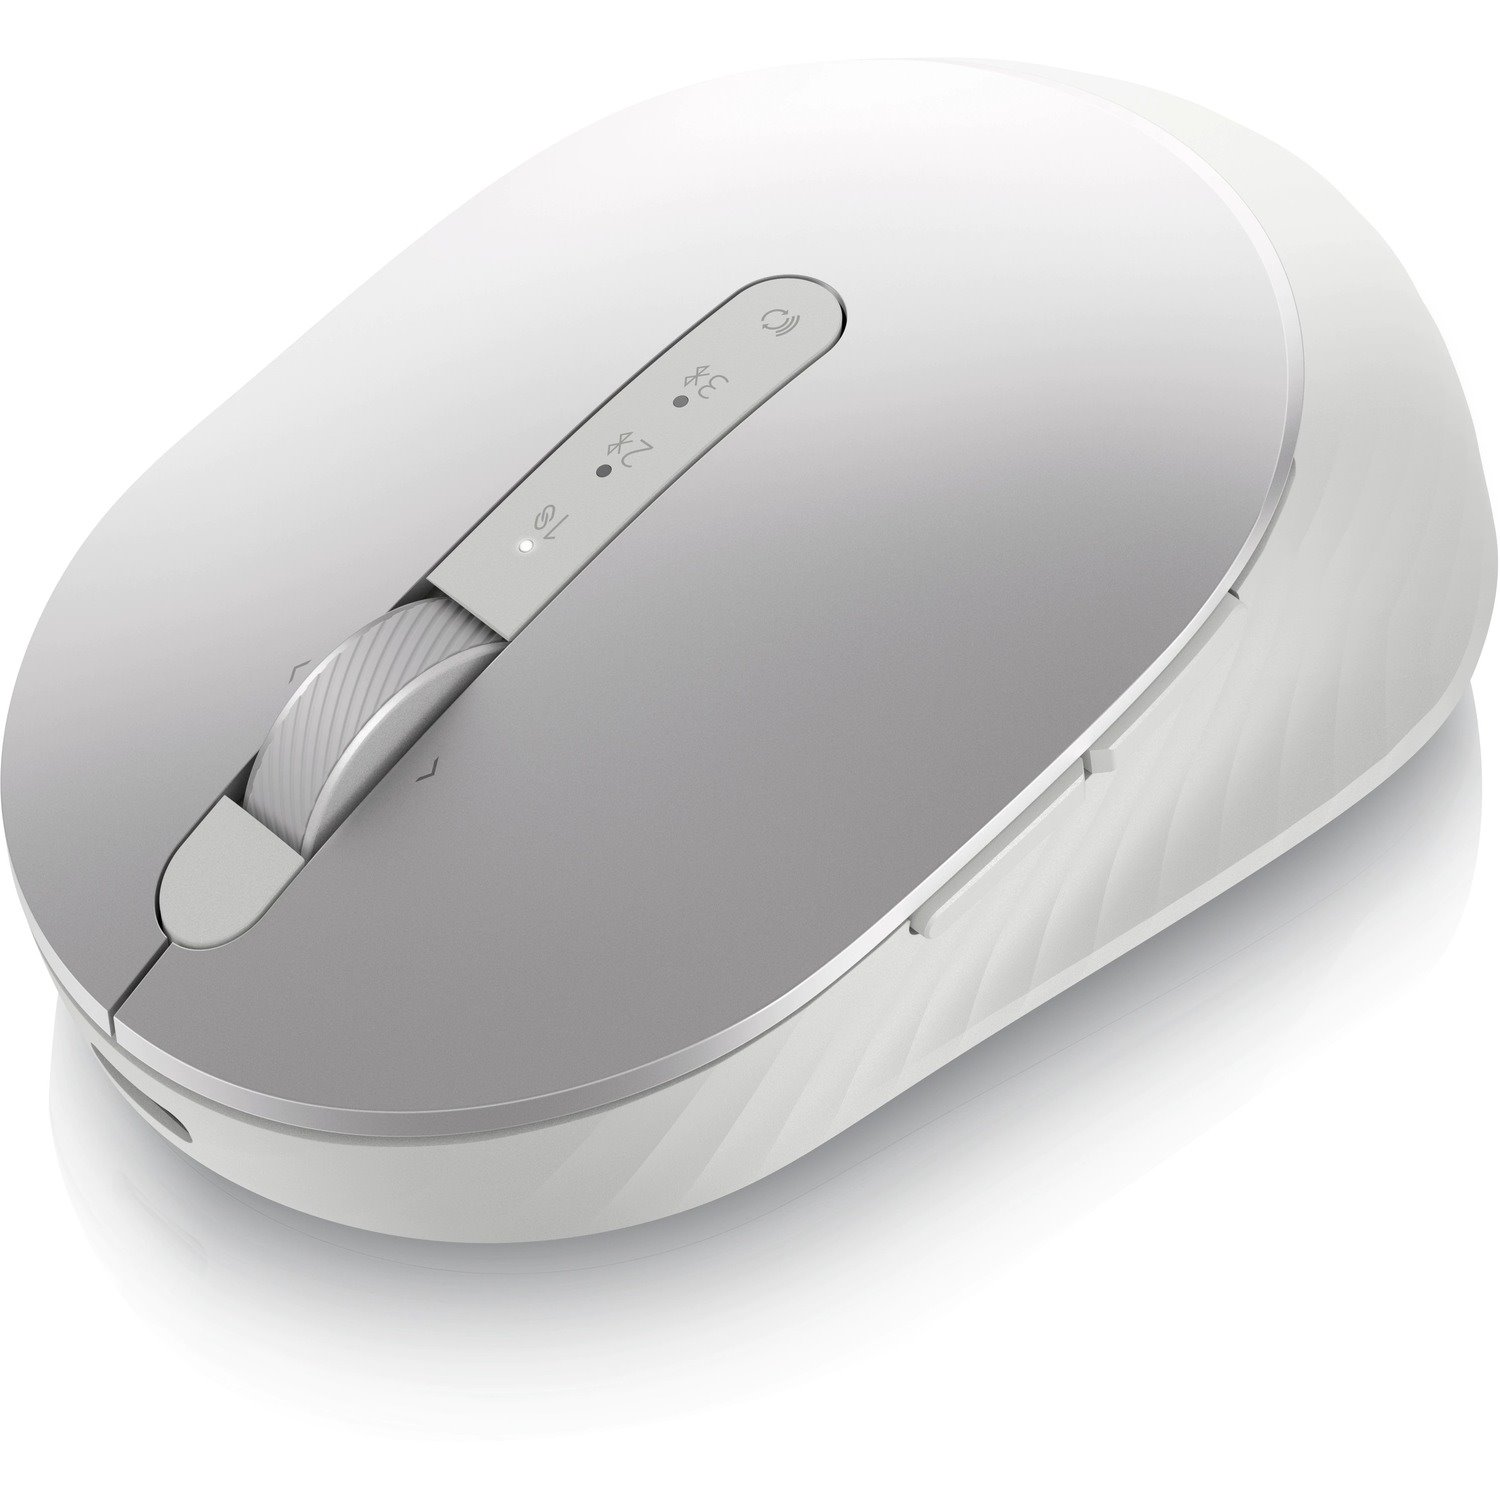 Dell Premier MS7421W Mouse - Bluetooth - USB Type C - Optical - 7 Button(s) - 5 Programmable Button(s) - Platinum Silver